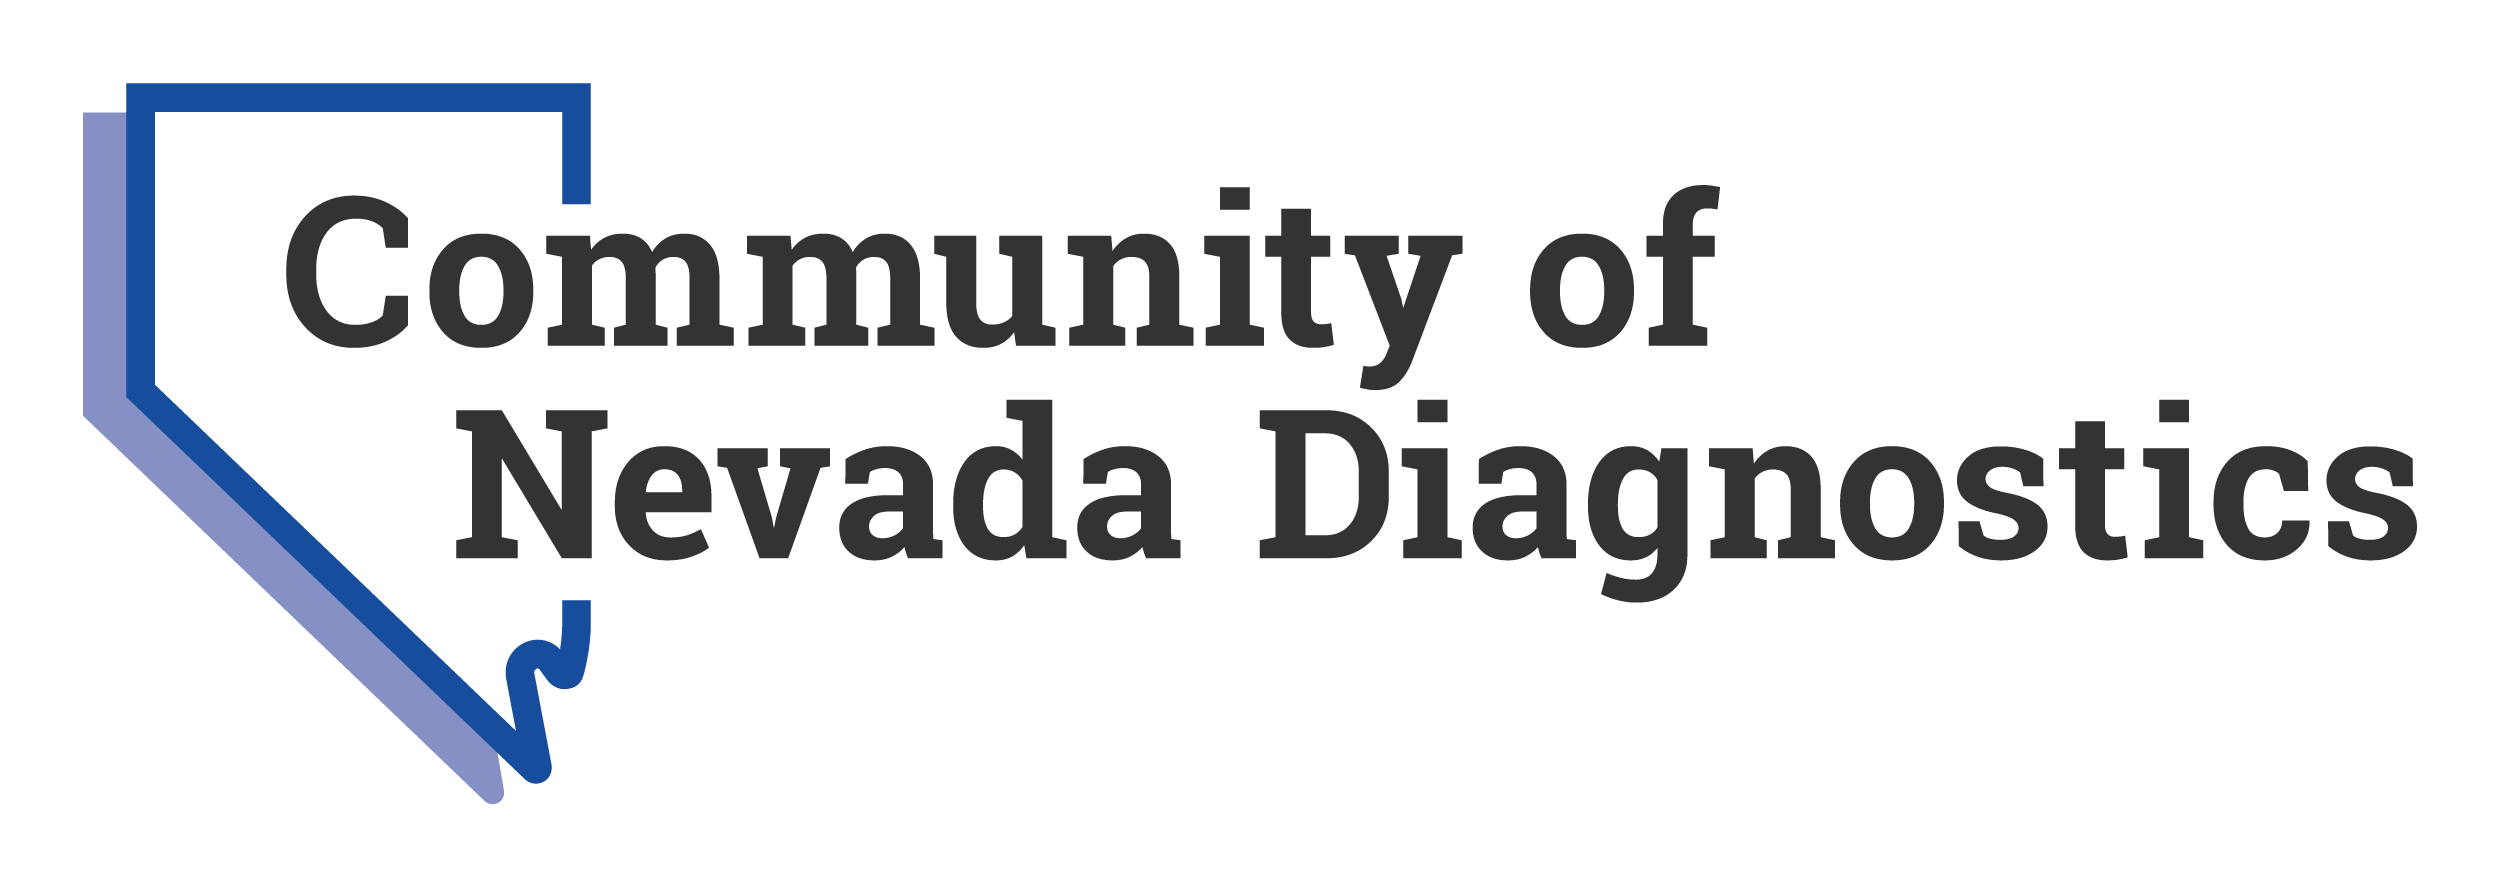 Community_of_Nevada_Diagnostics